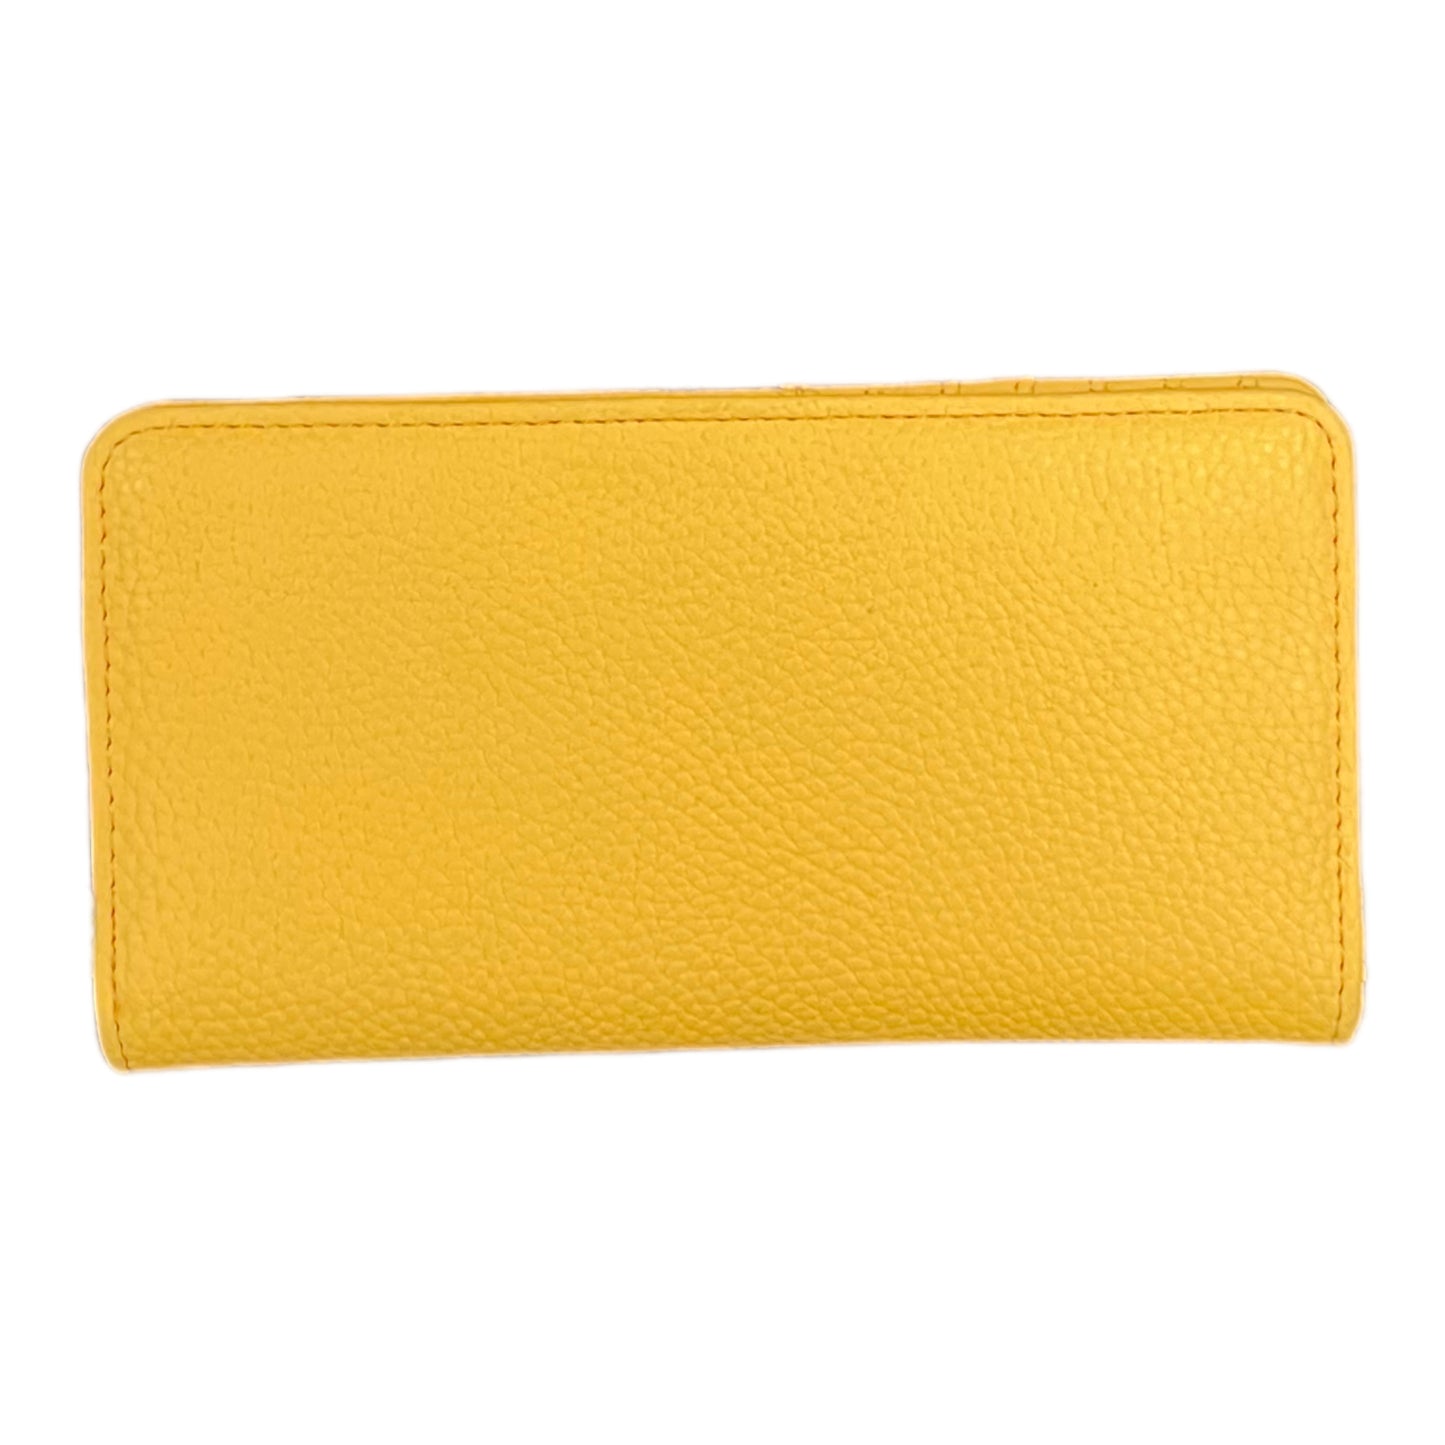 Wallet By Anne Klein O  Size: Large